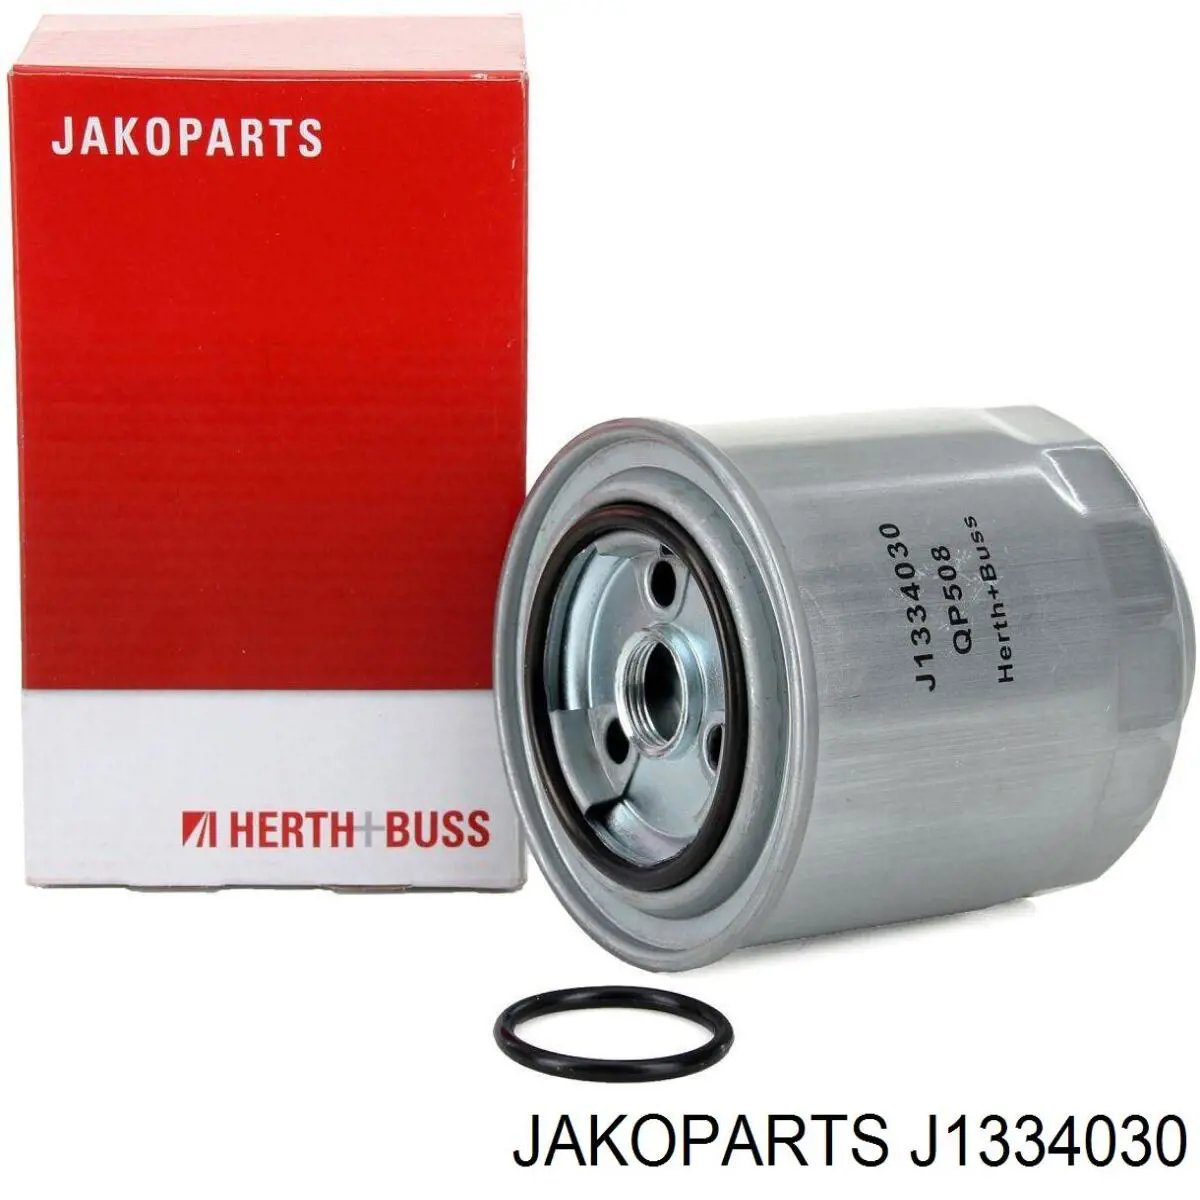 J1334030 Jakoparts filtro combustible